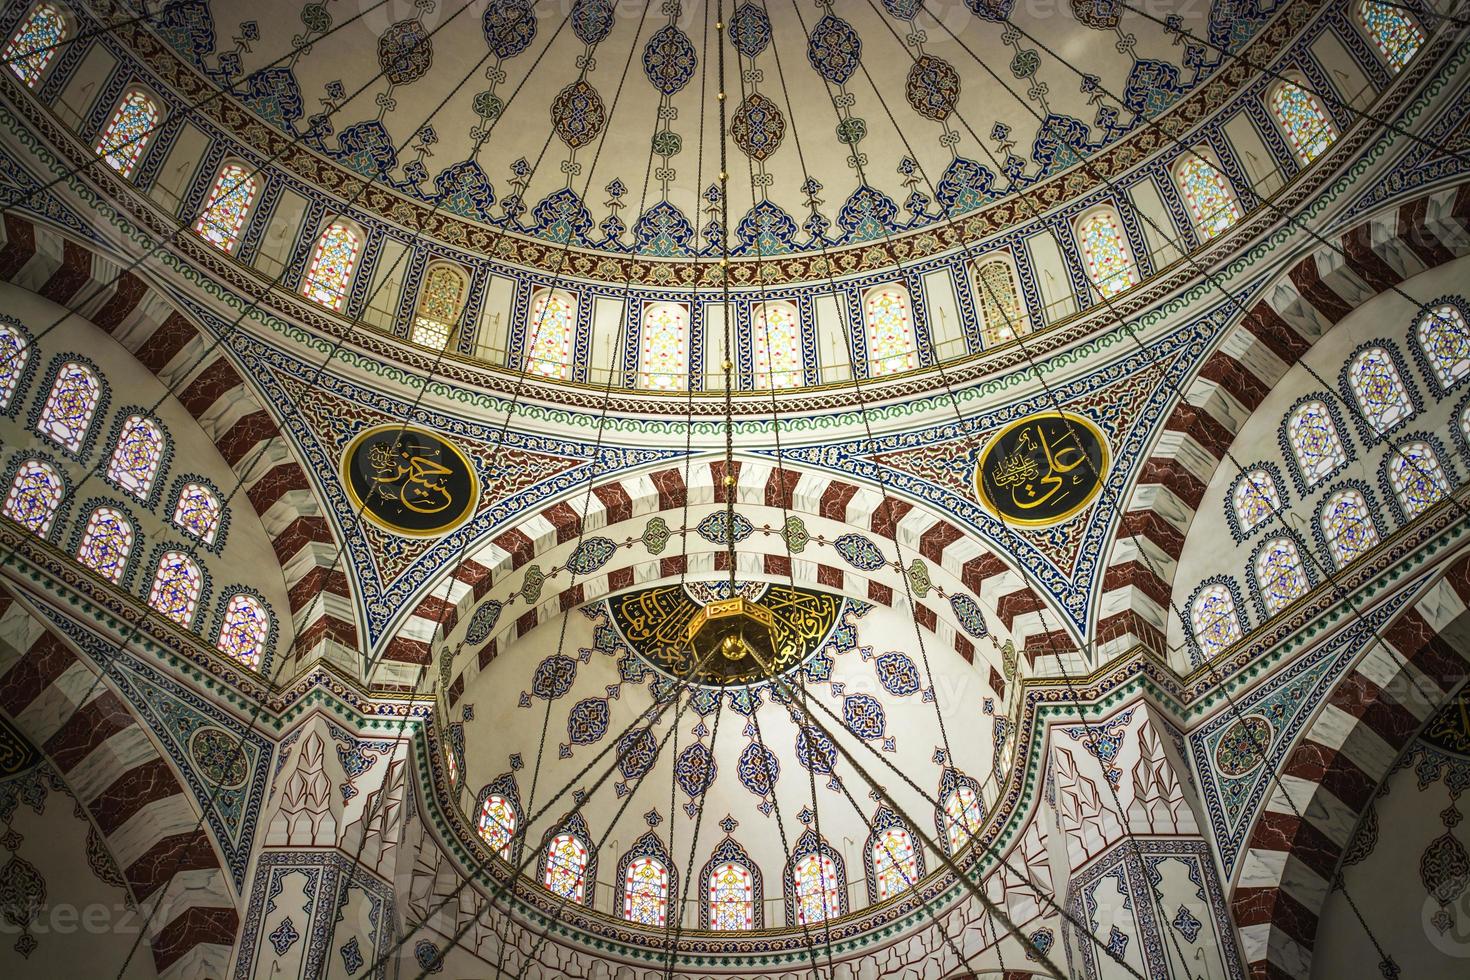 grande, mesquita central, adana, turquia foto